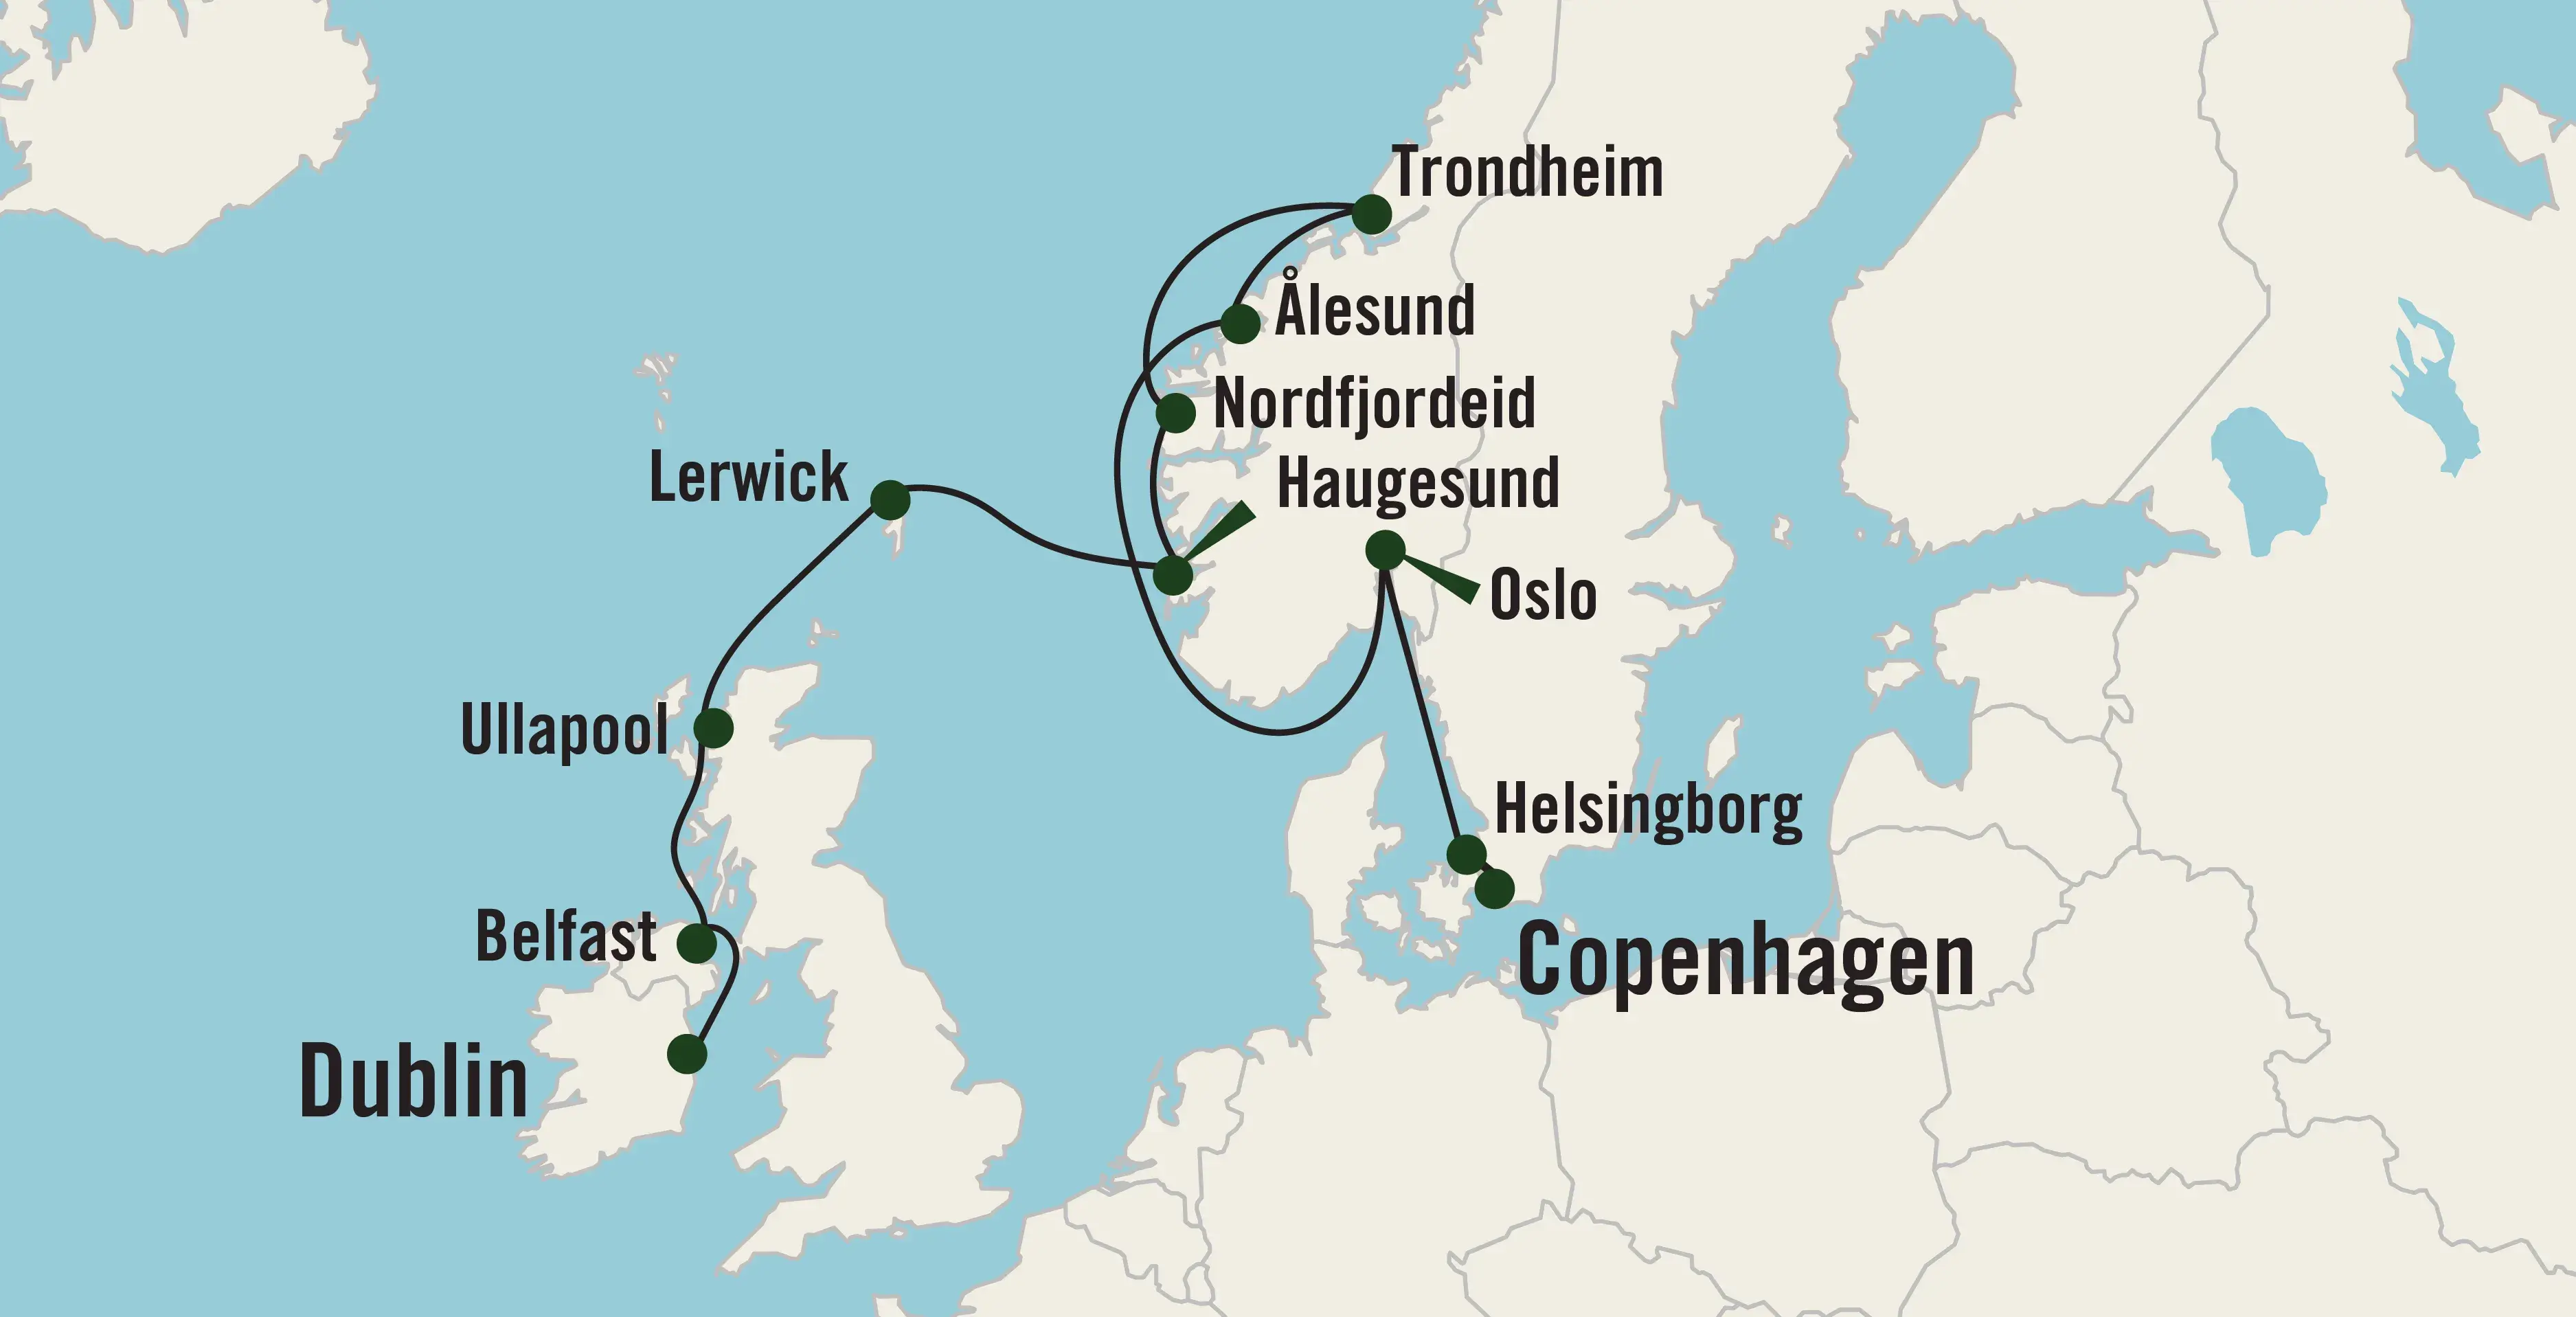 Cruise map of Europe